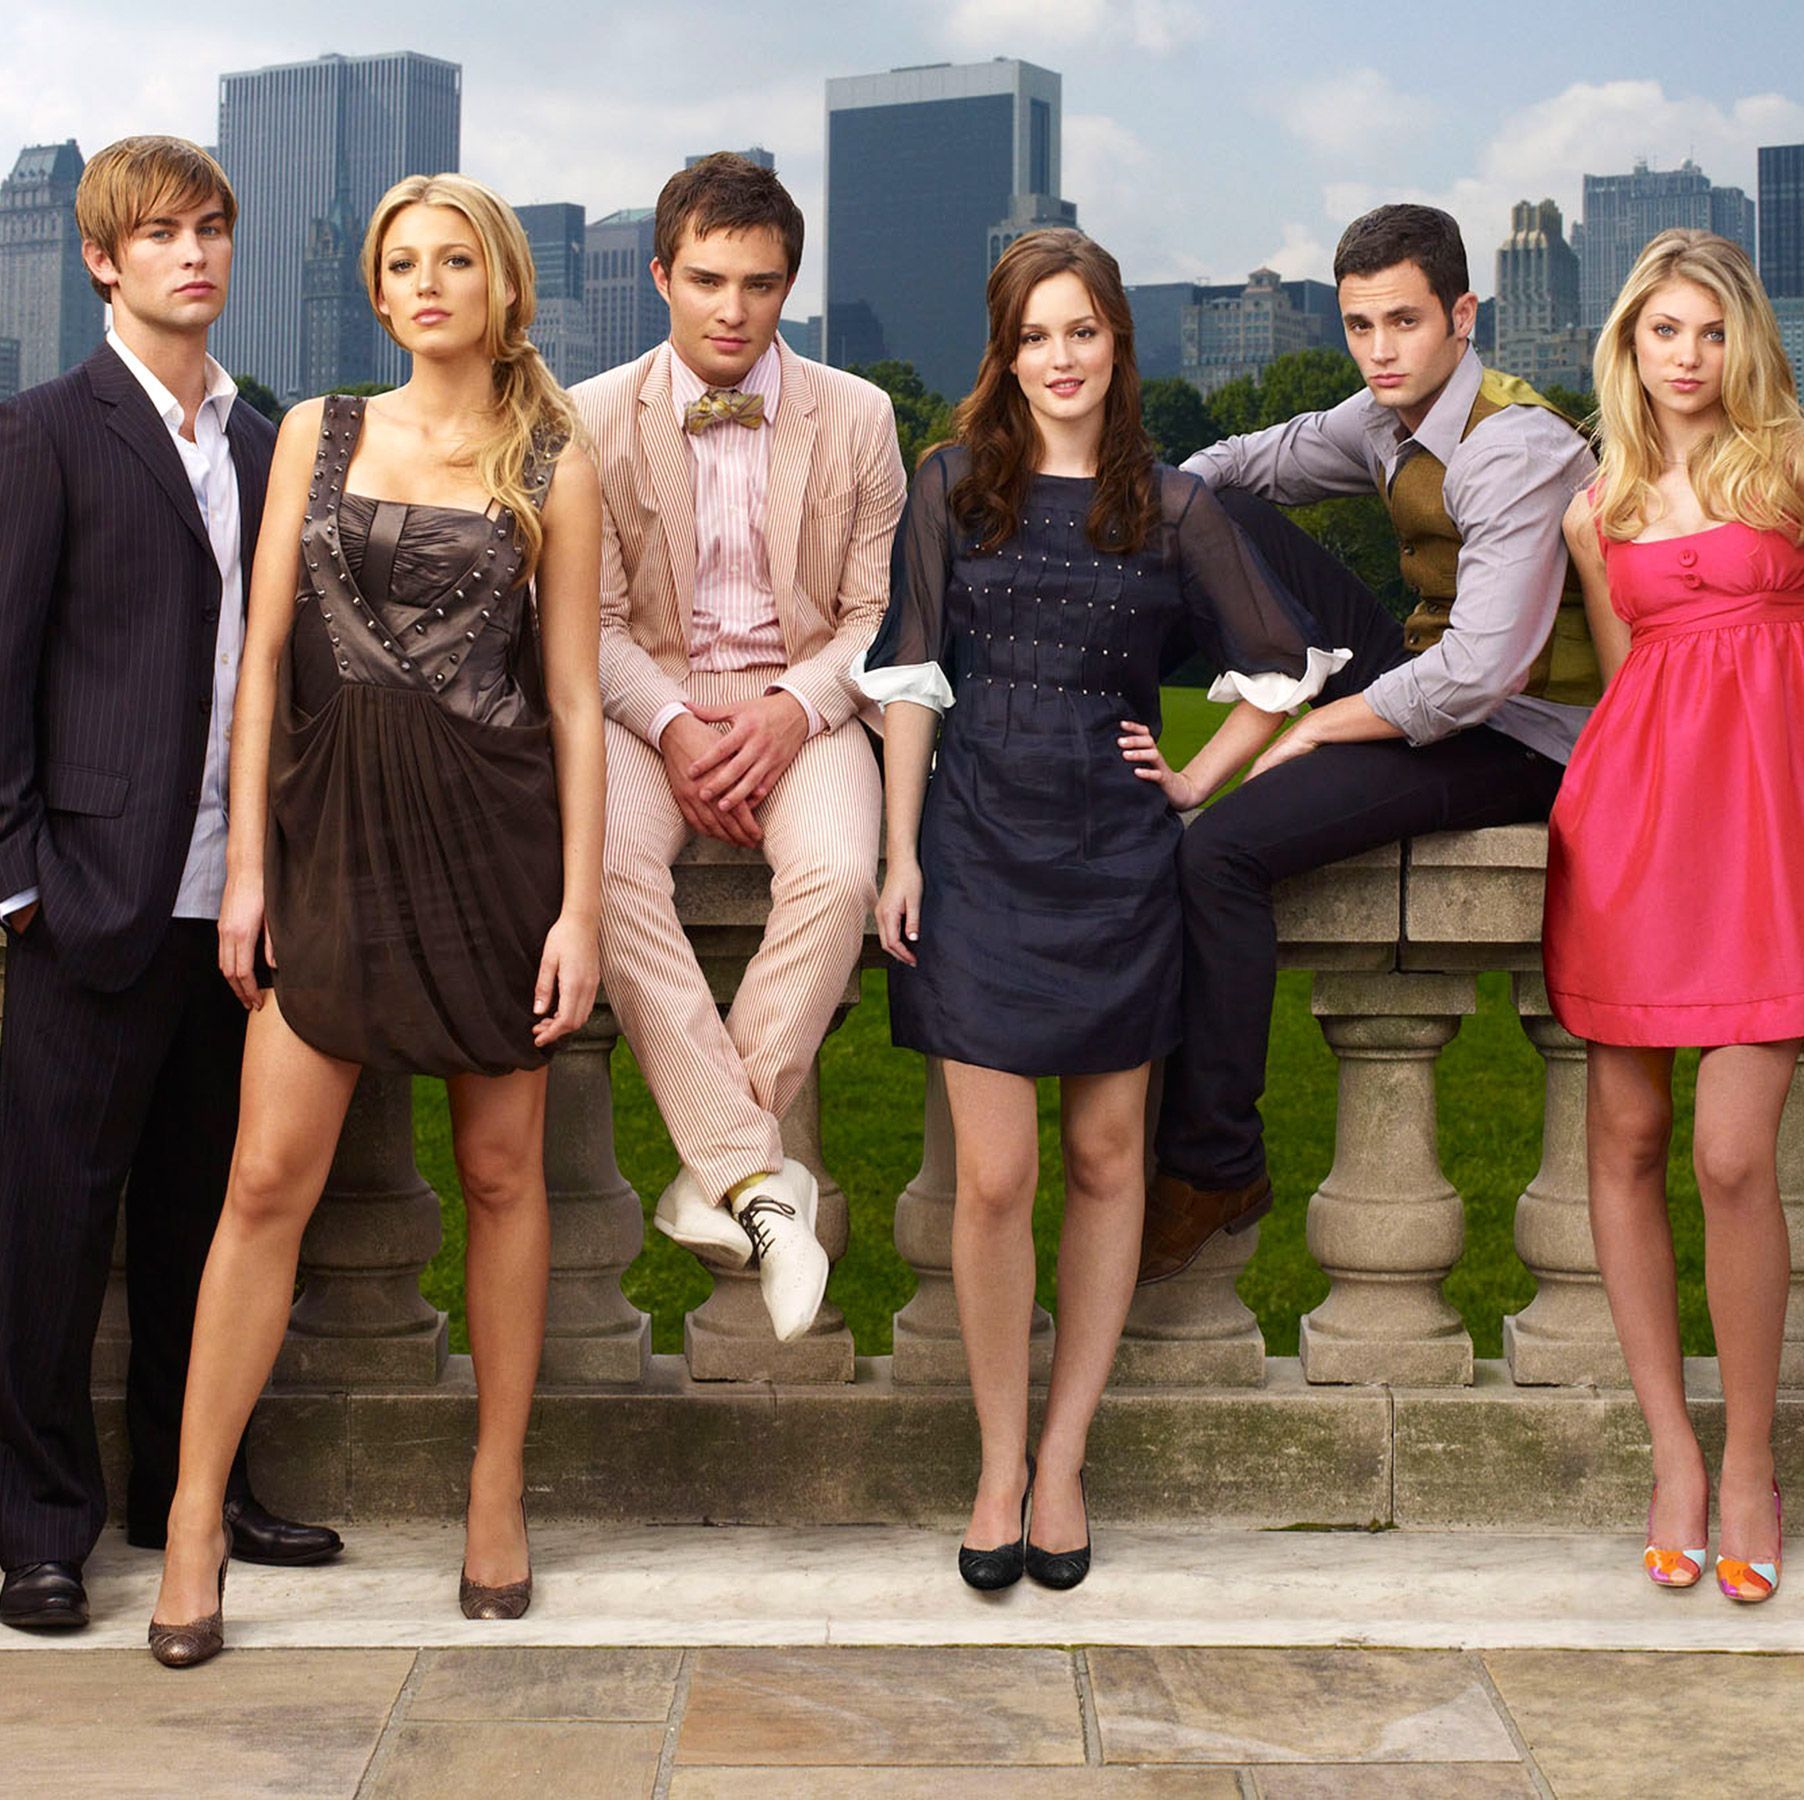 Gossip Girl Season 2: : Movies & TV Shows